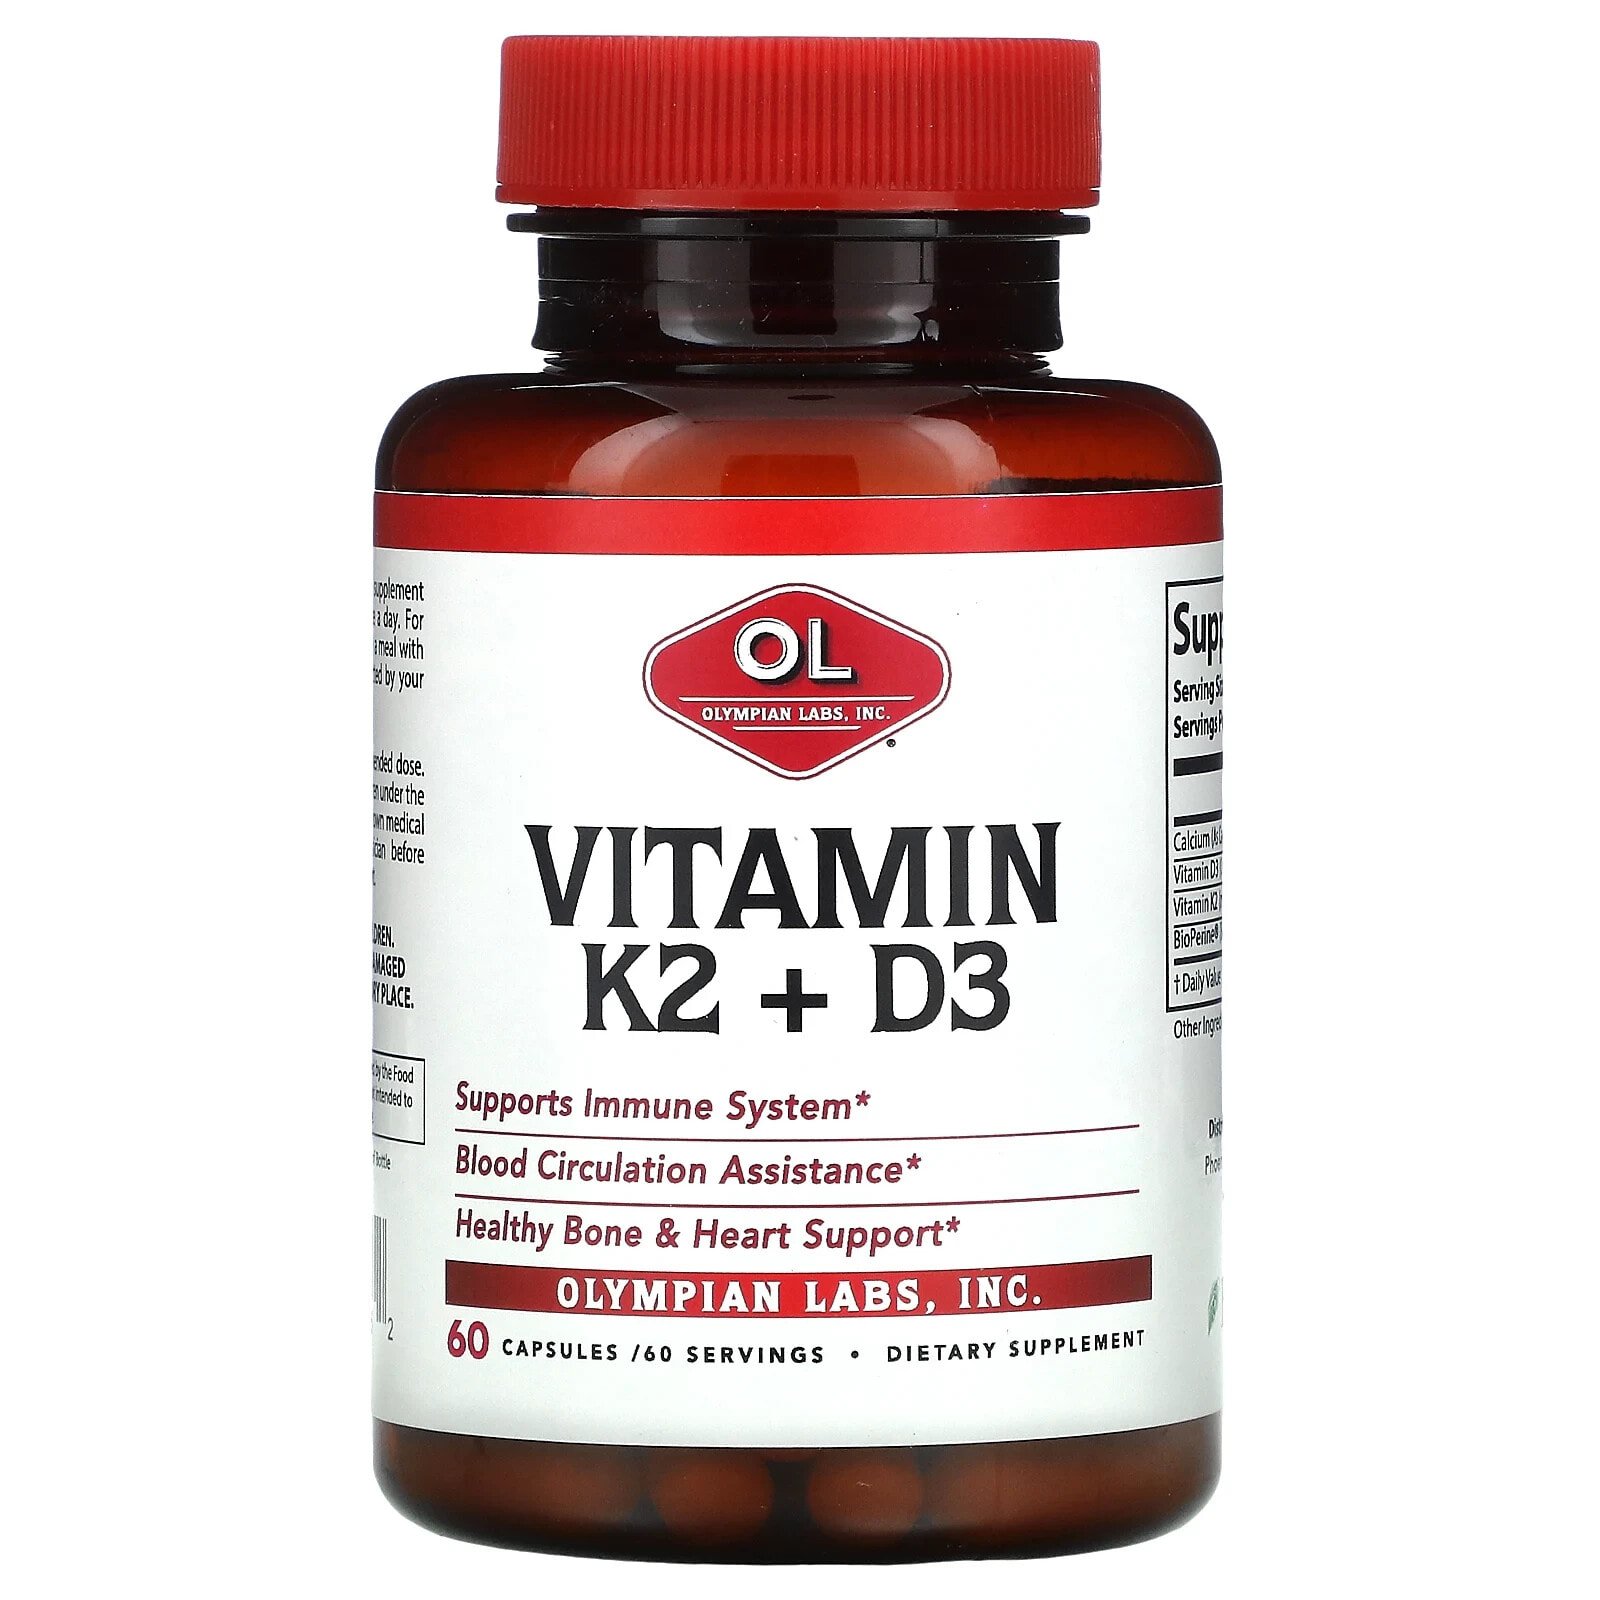 Olympian Labs Inc., Vitamin K2 + D3, 60 Capsules